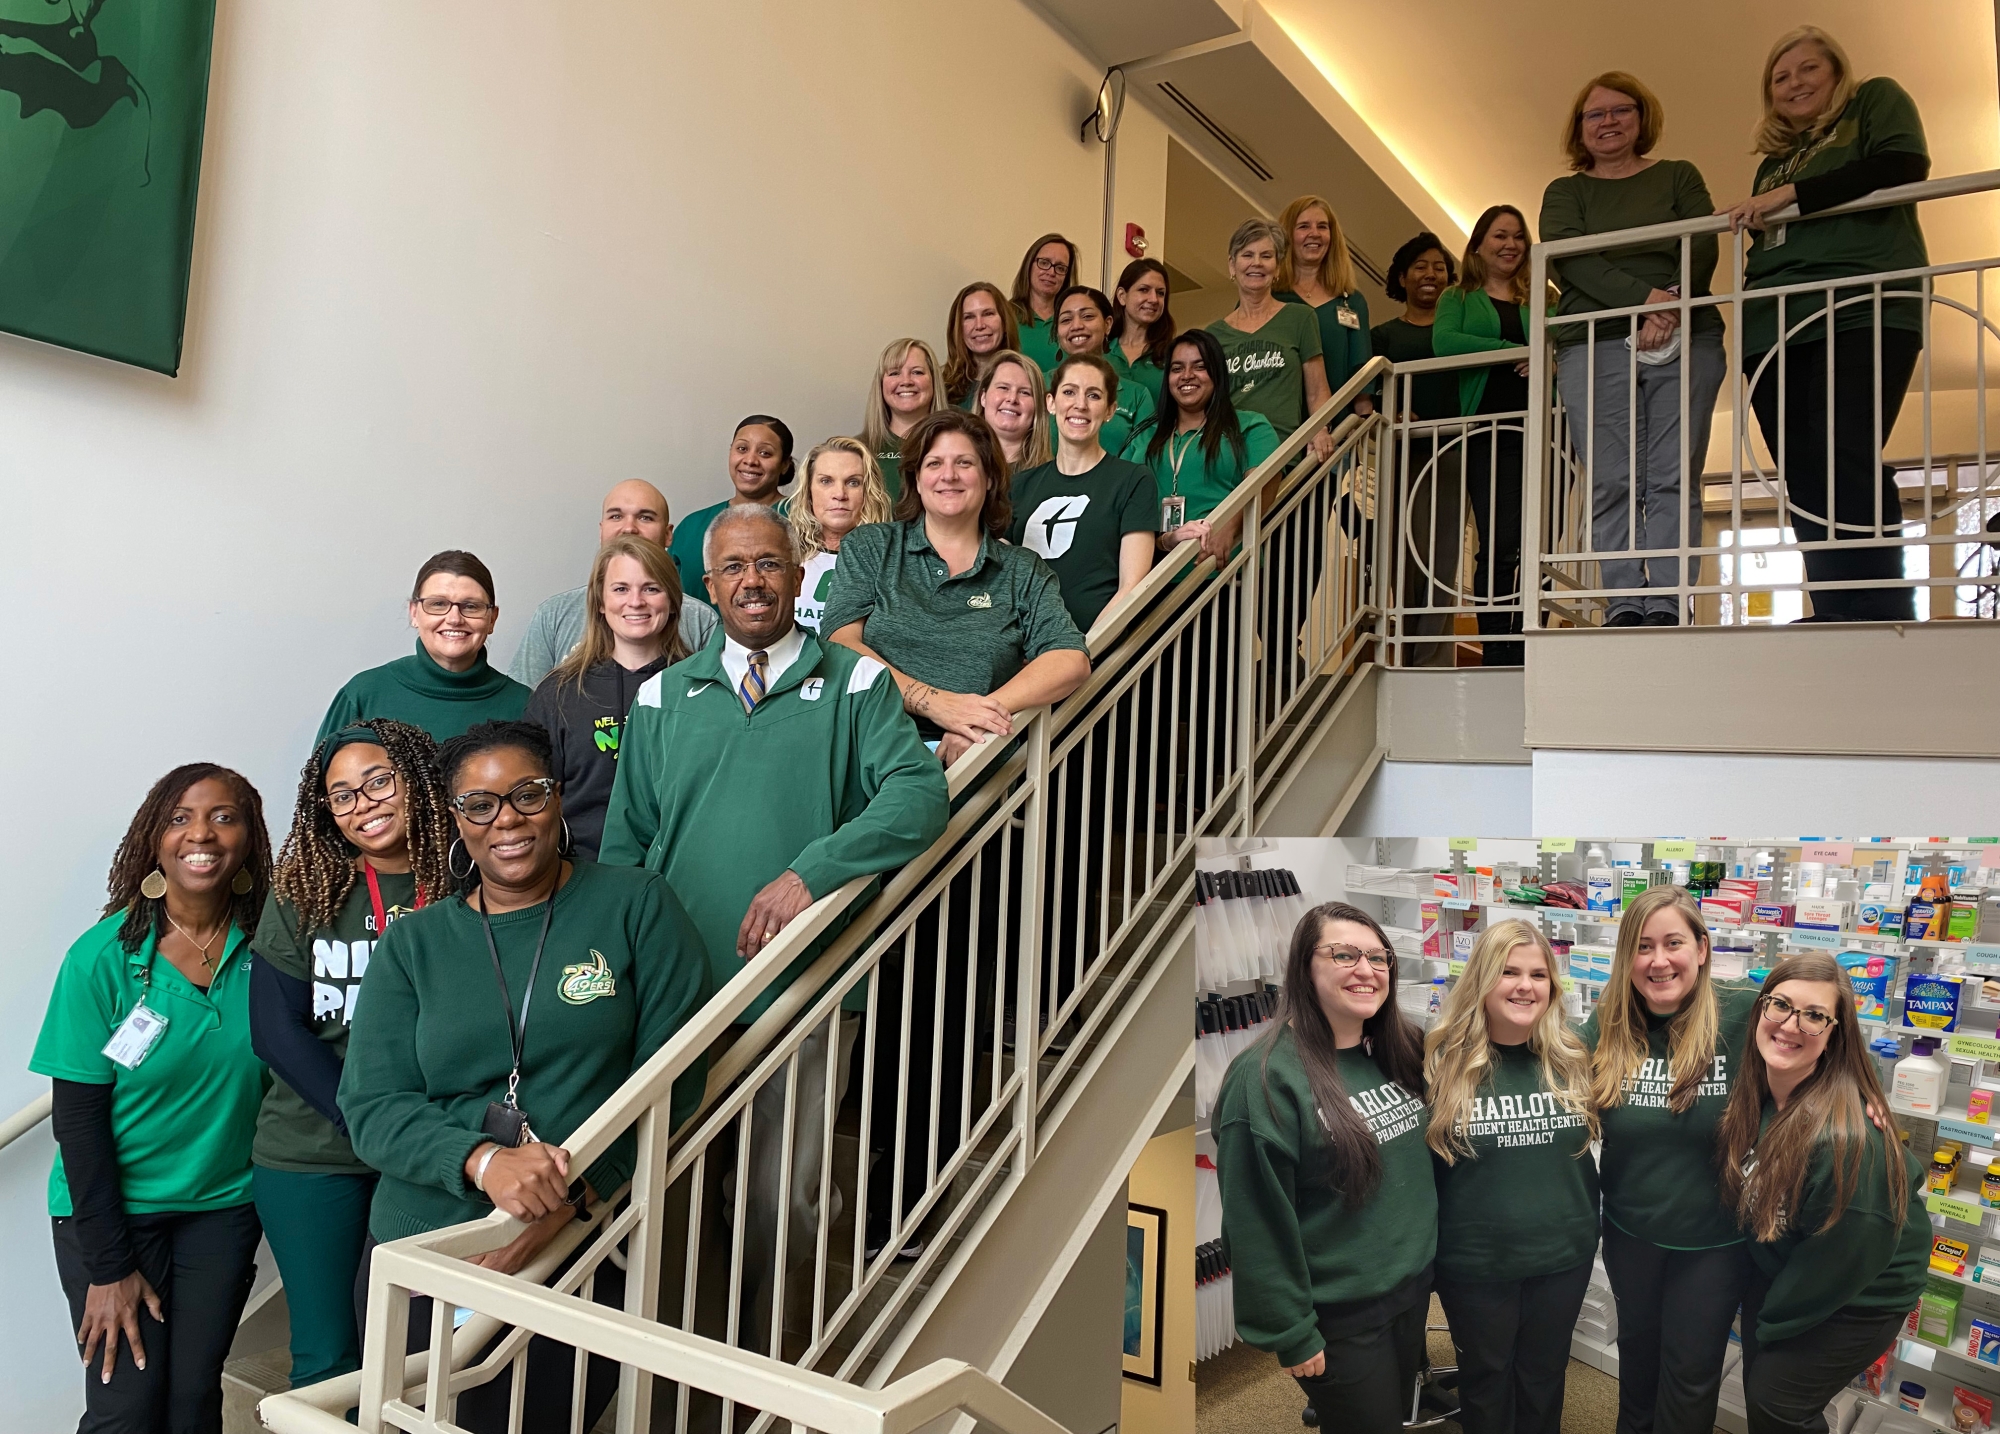 Student Health Center Staff Wear Green!